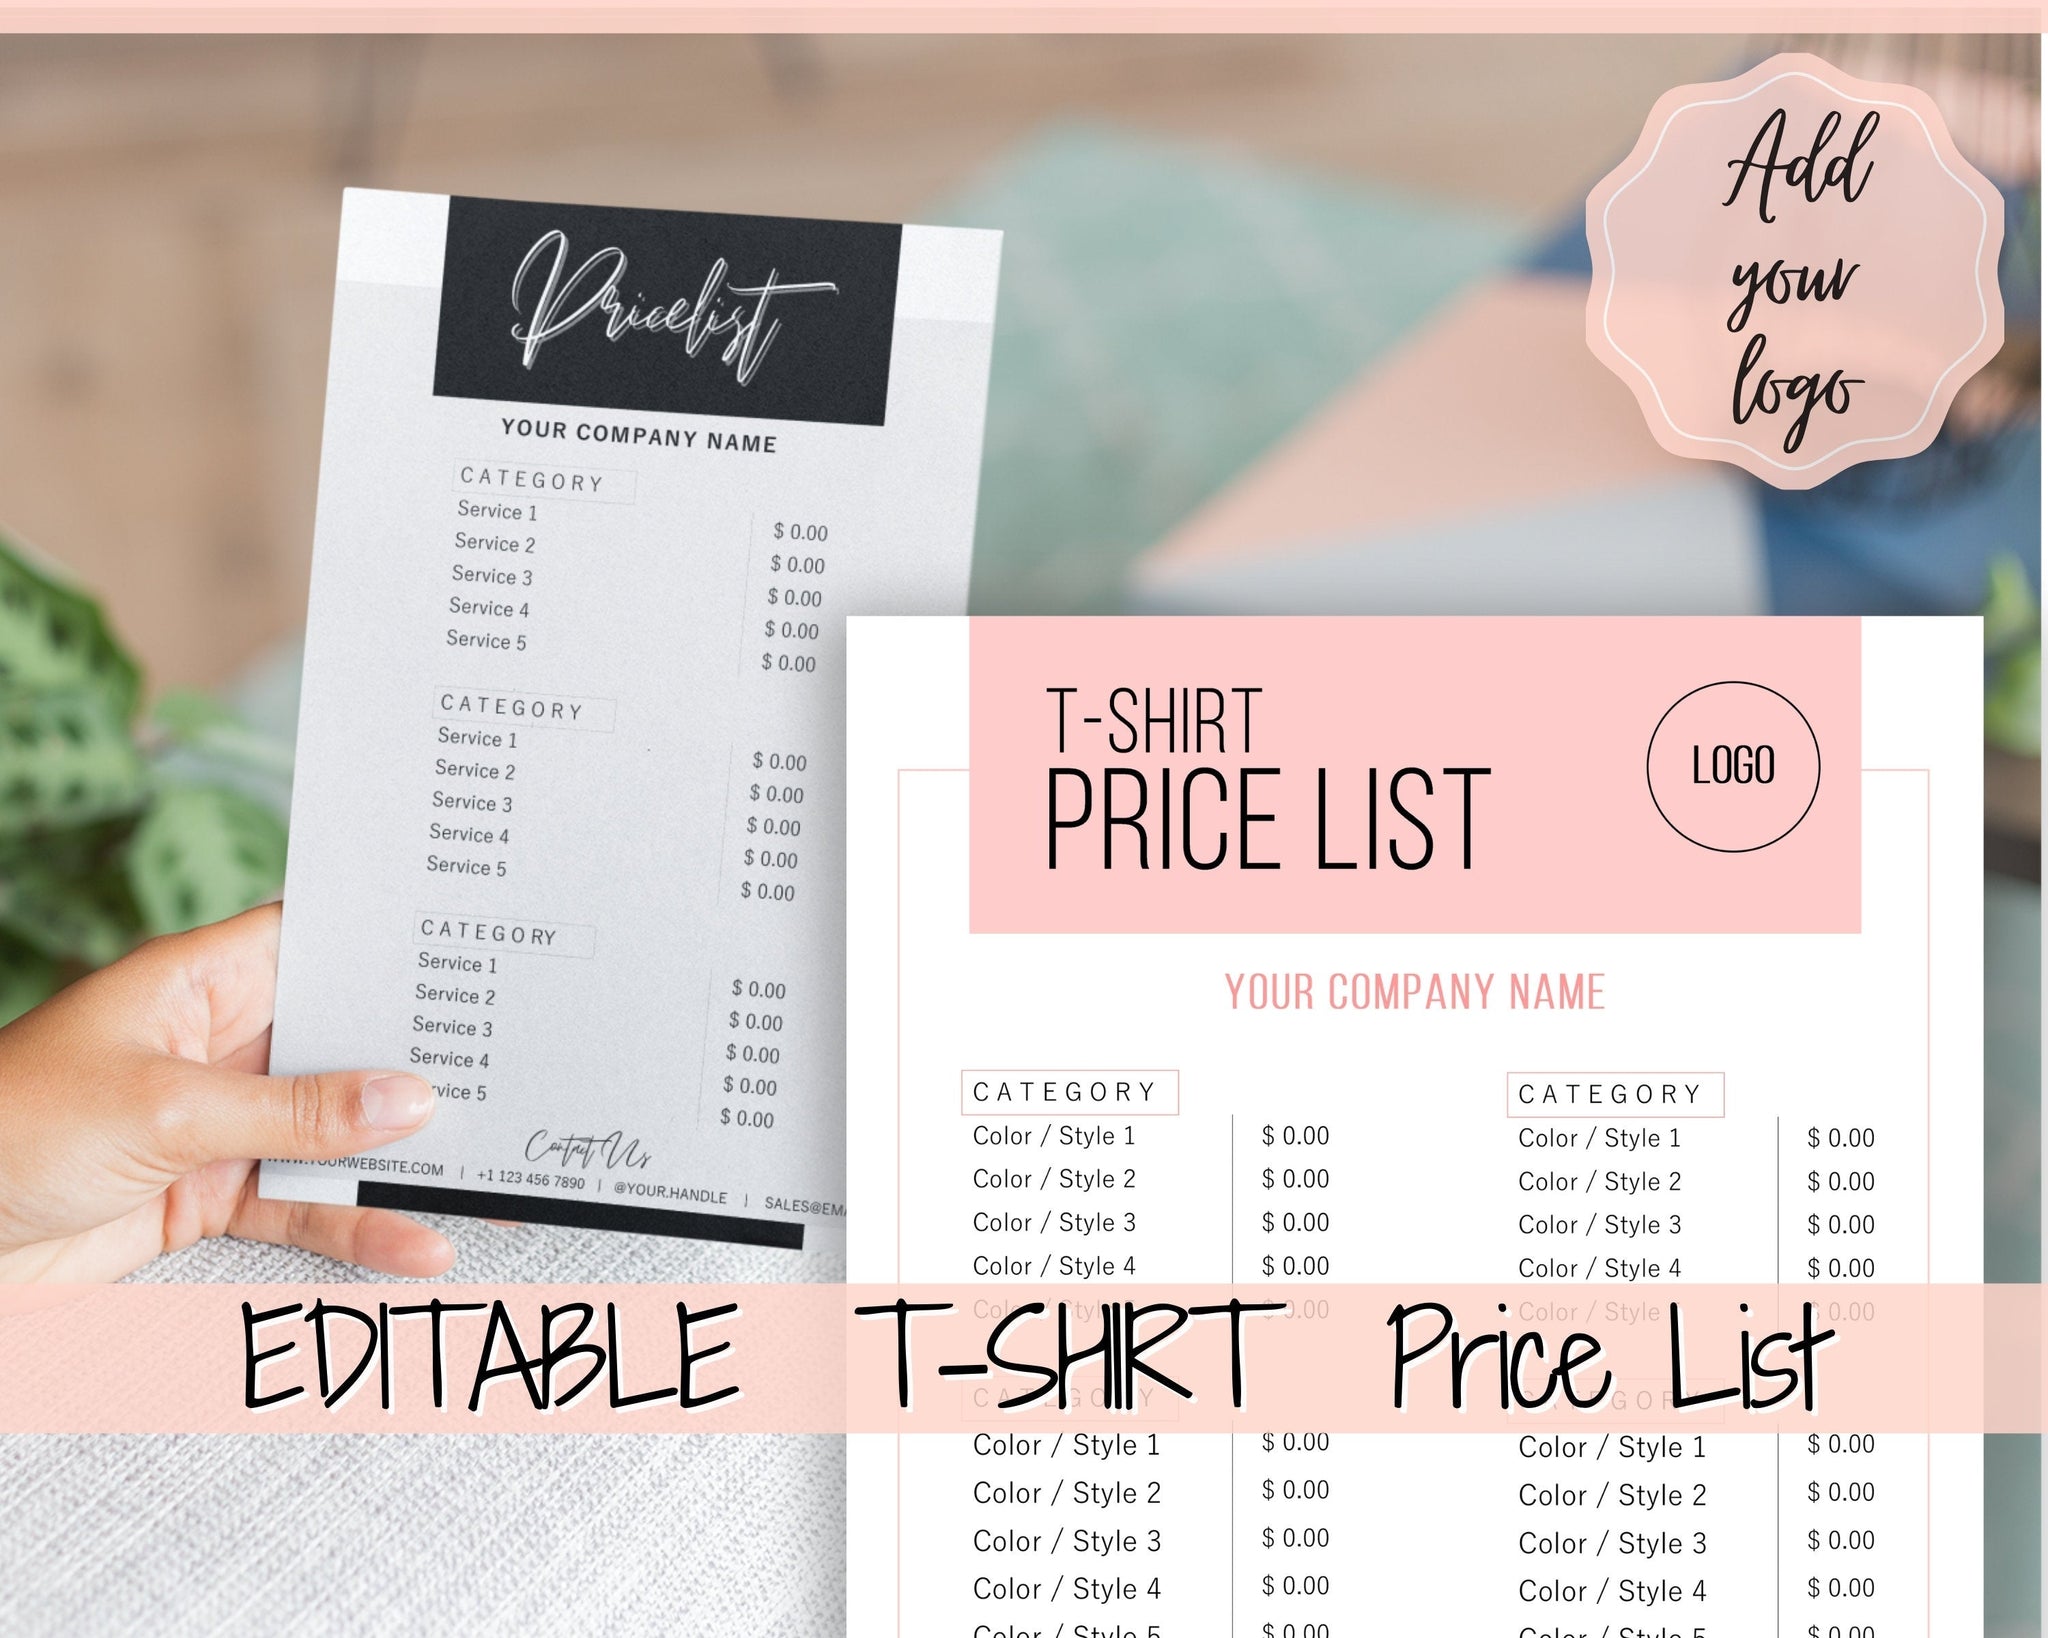 Tshirt PRICE LIST Template Editable | Printable Price Sheet & Price Guide |  Mono